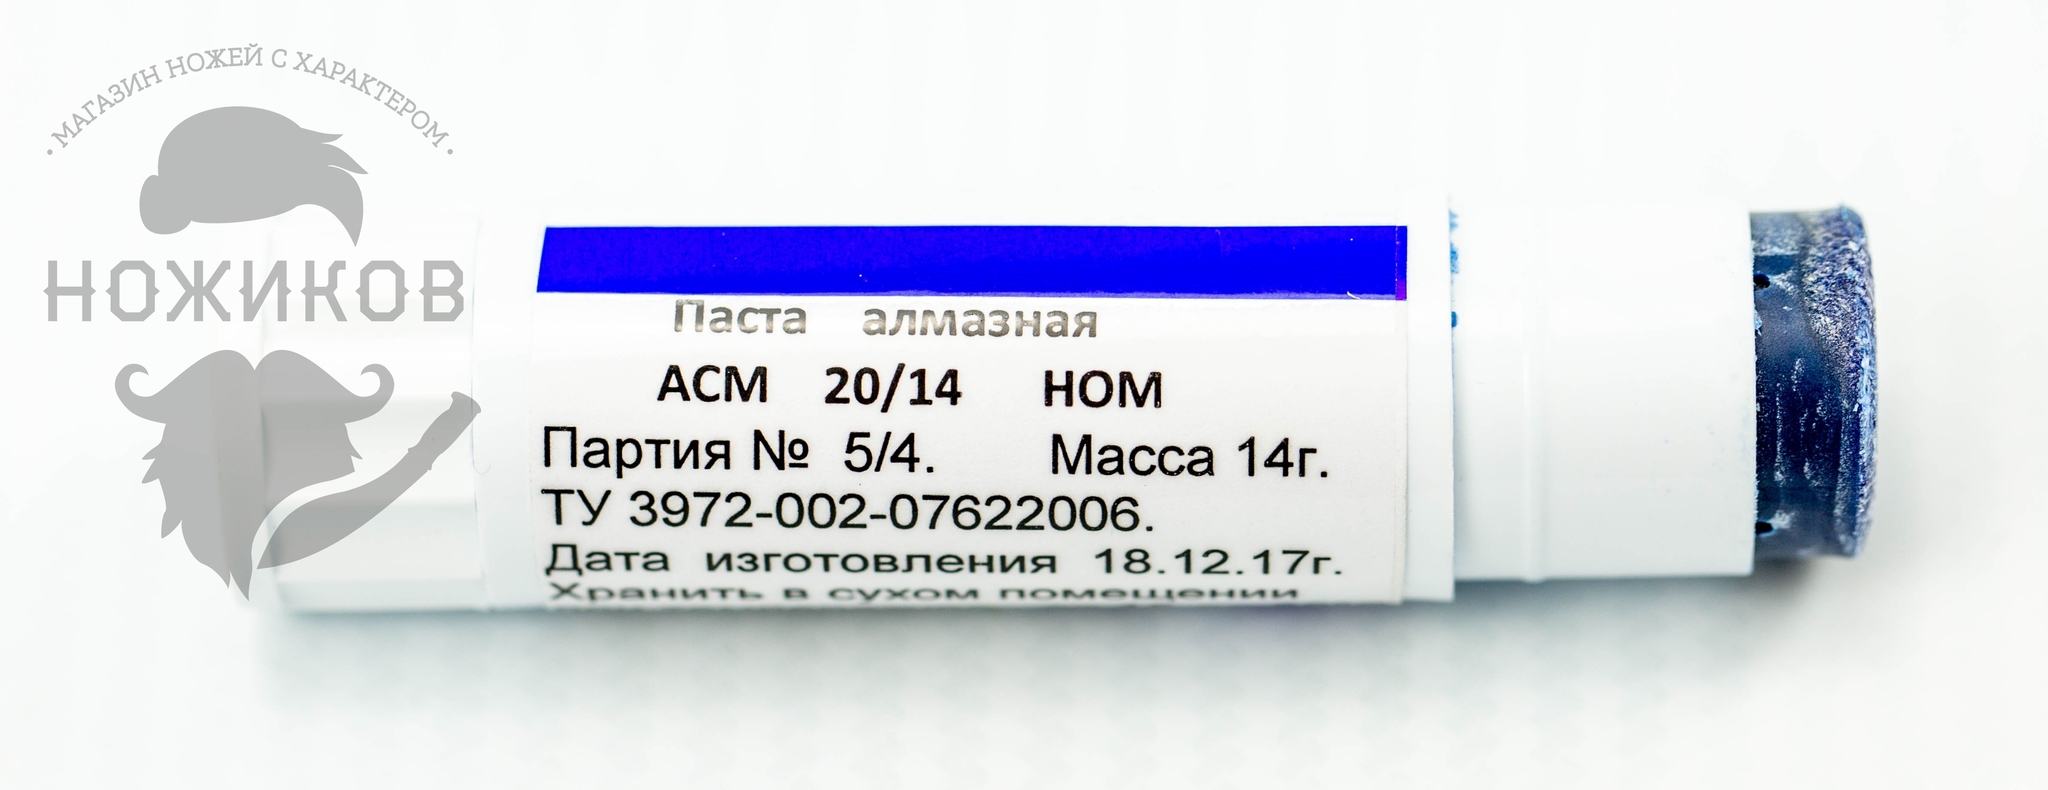 Алмазная паста HOM ACM 20/14, 14 гр. - фото 3